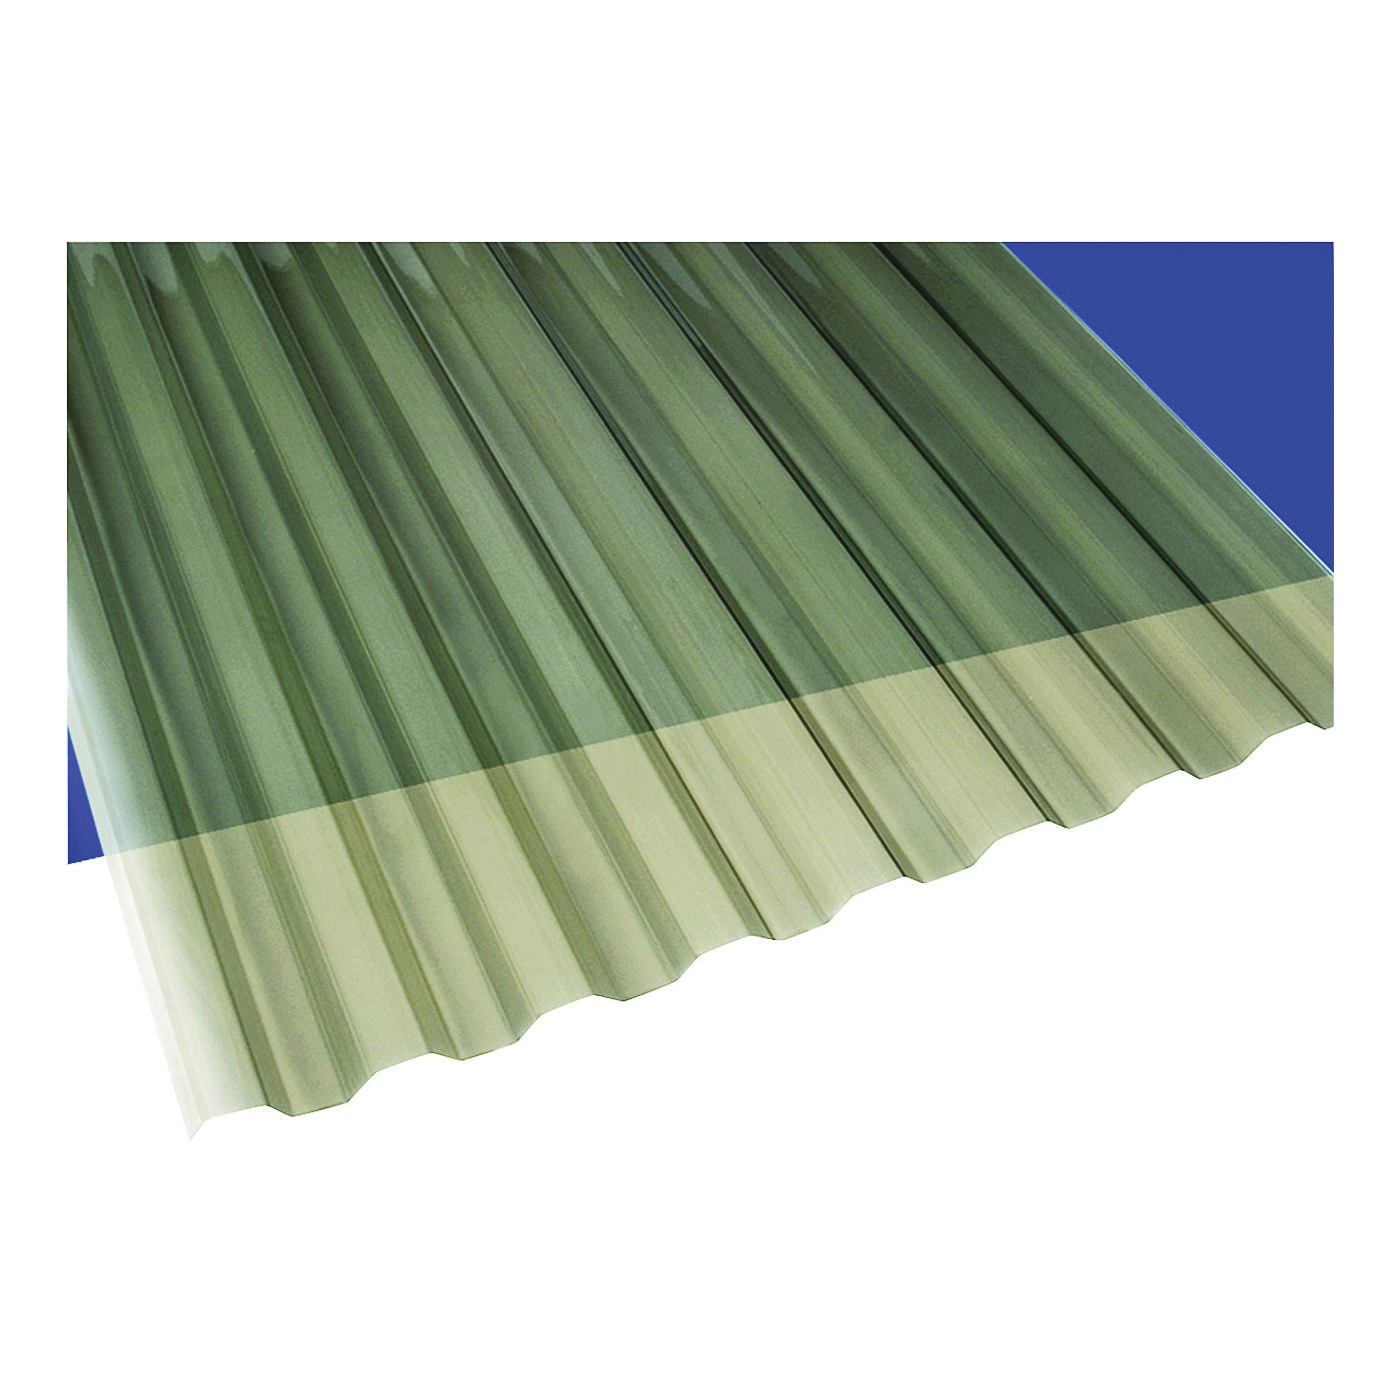 Suntuf 101929 Corrugated Panel, 8 ft L, 26 in W, Greca 76 Profile, 0.032 in Thick Material, Polycarbonate, Solar Gray - 1